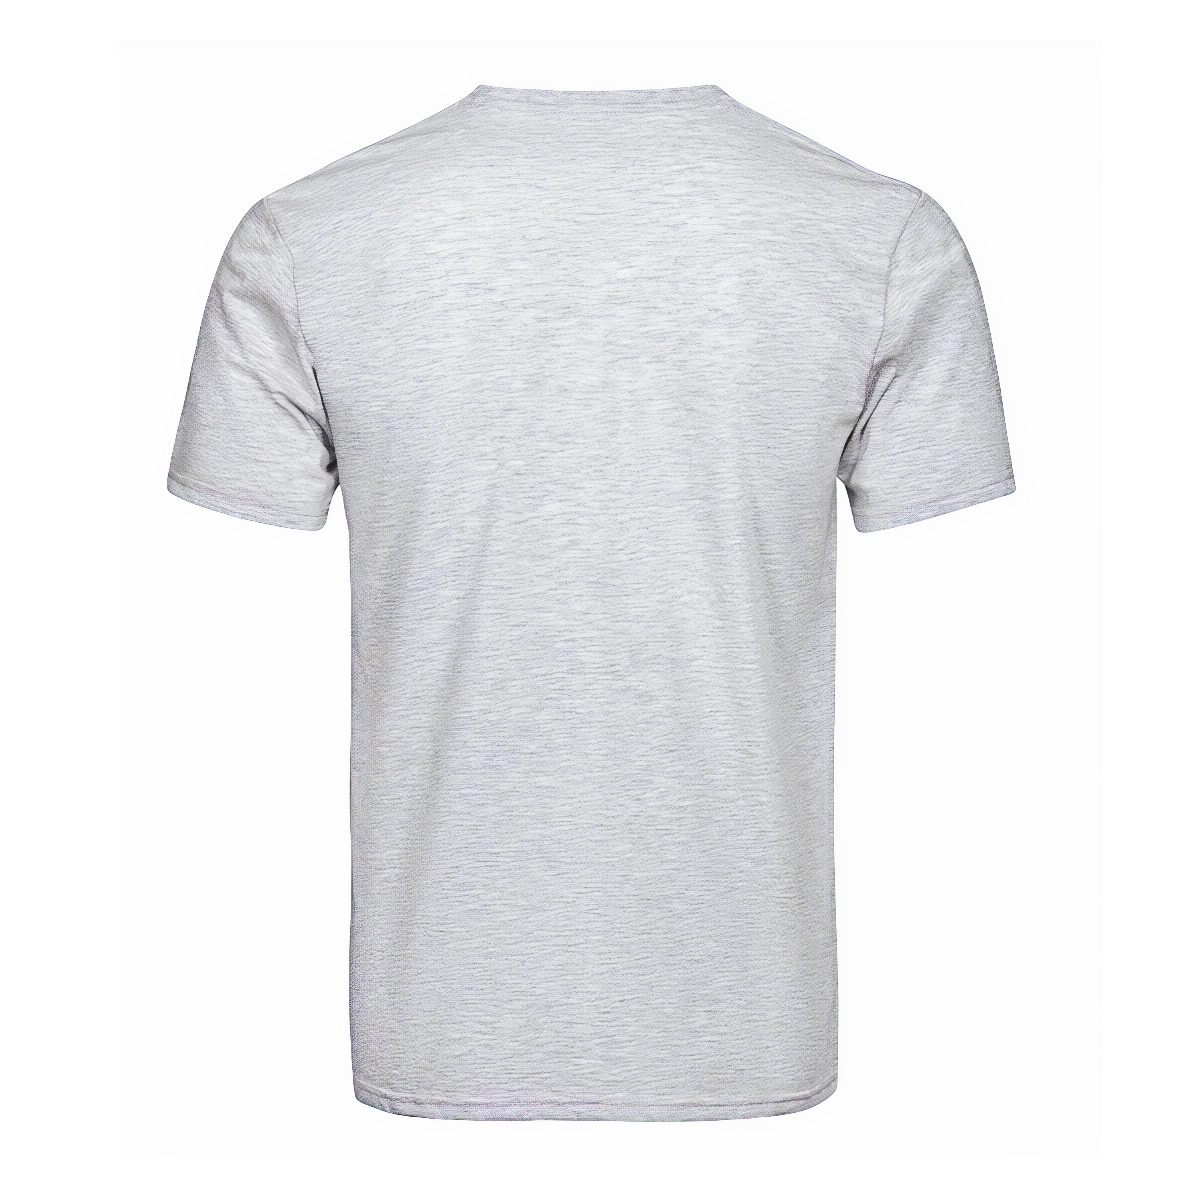 Langlands Tartan Crest T-shirt - I'm not yelling style